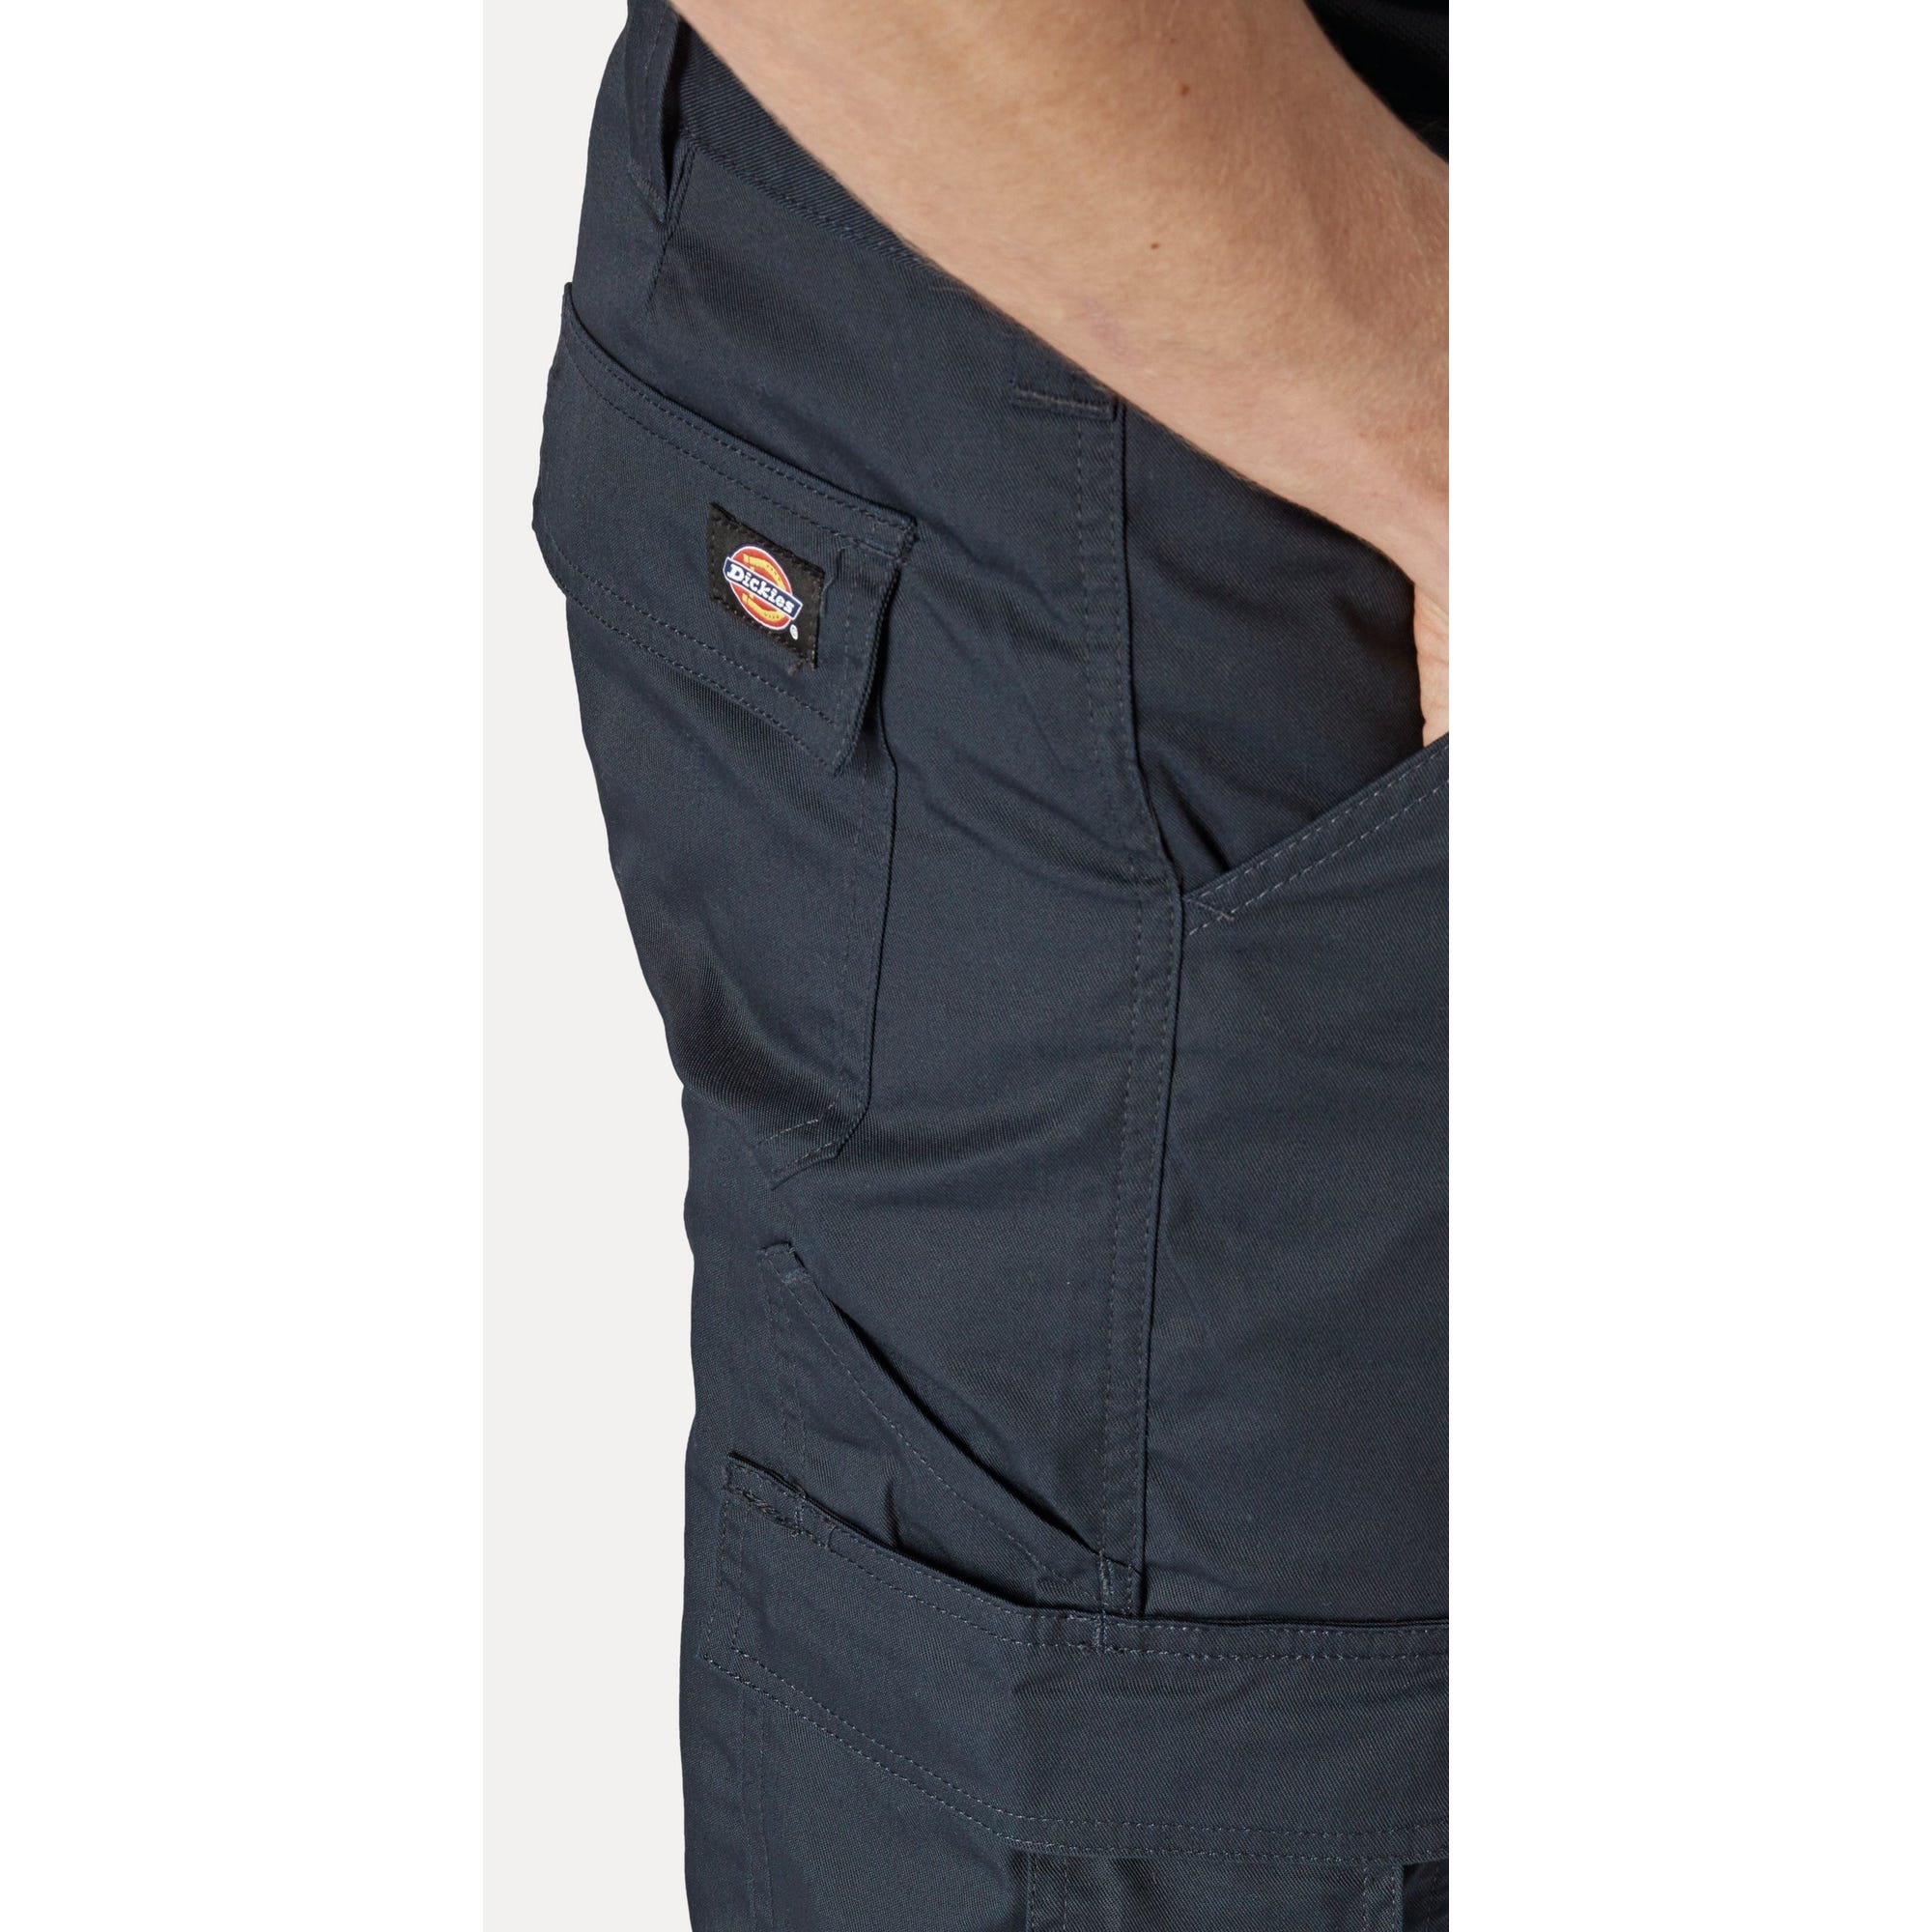 Pantalon Everyday Kaki et noir- Dickies - Taille 48 8